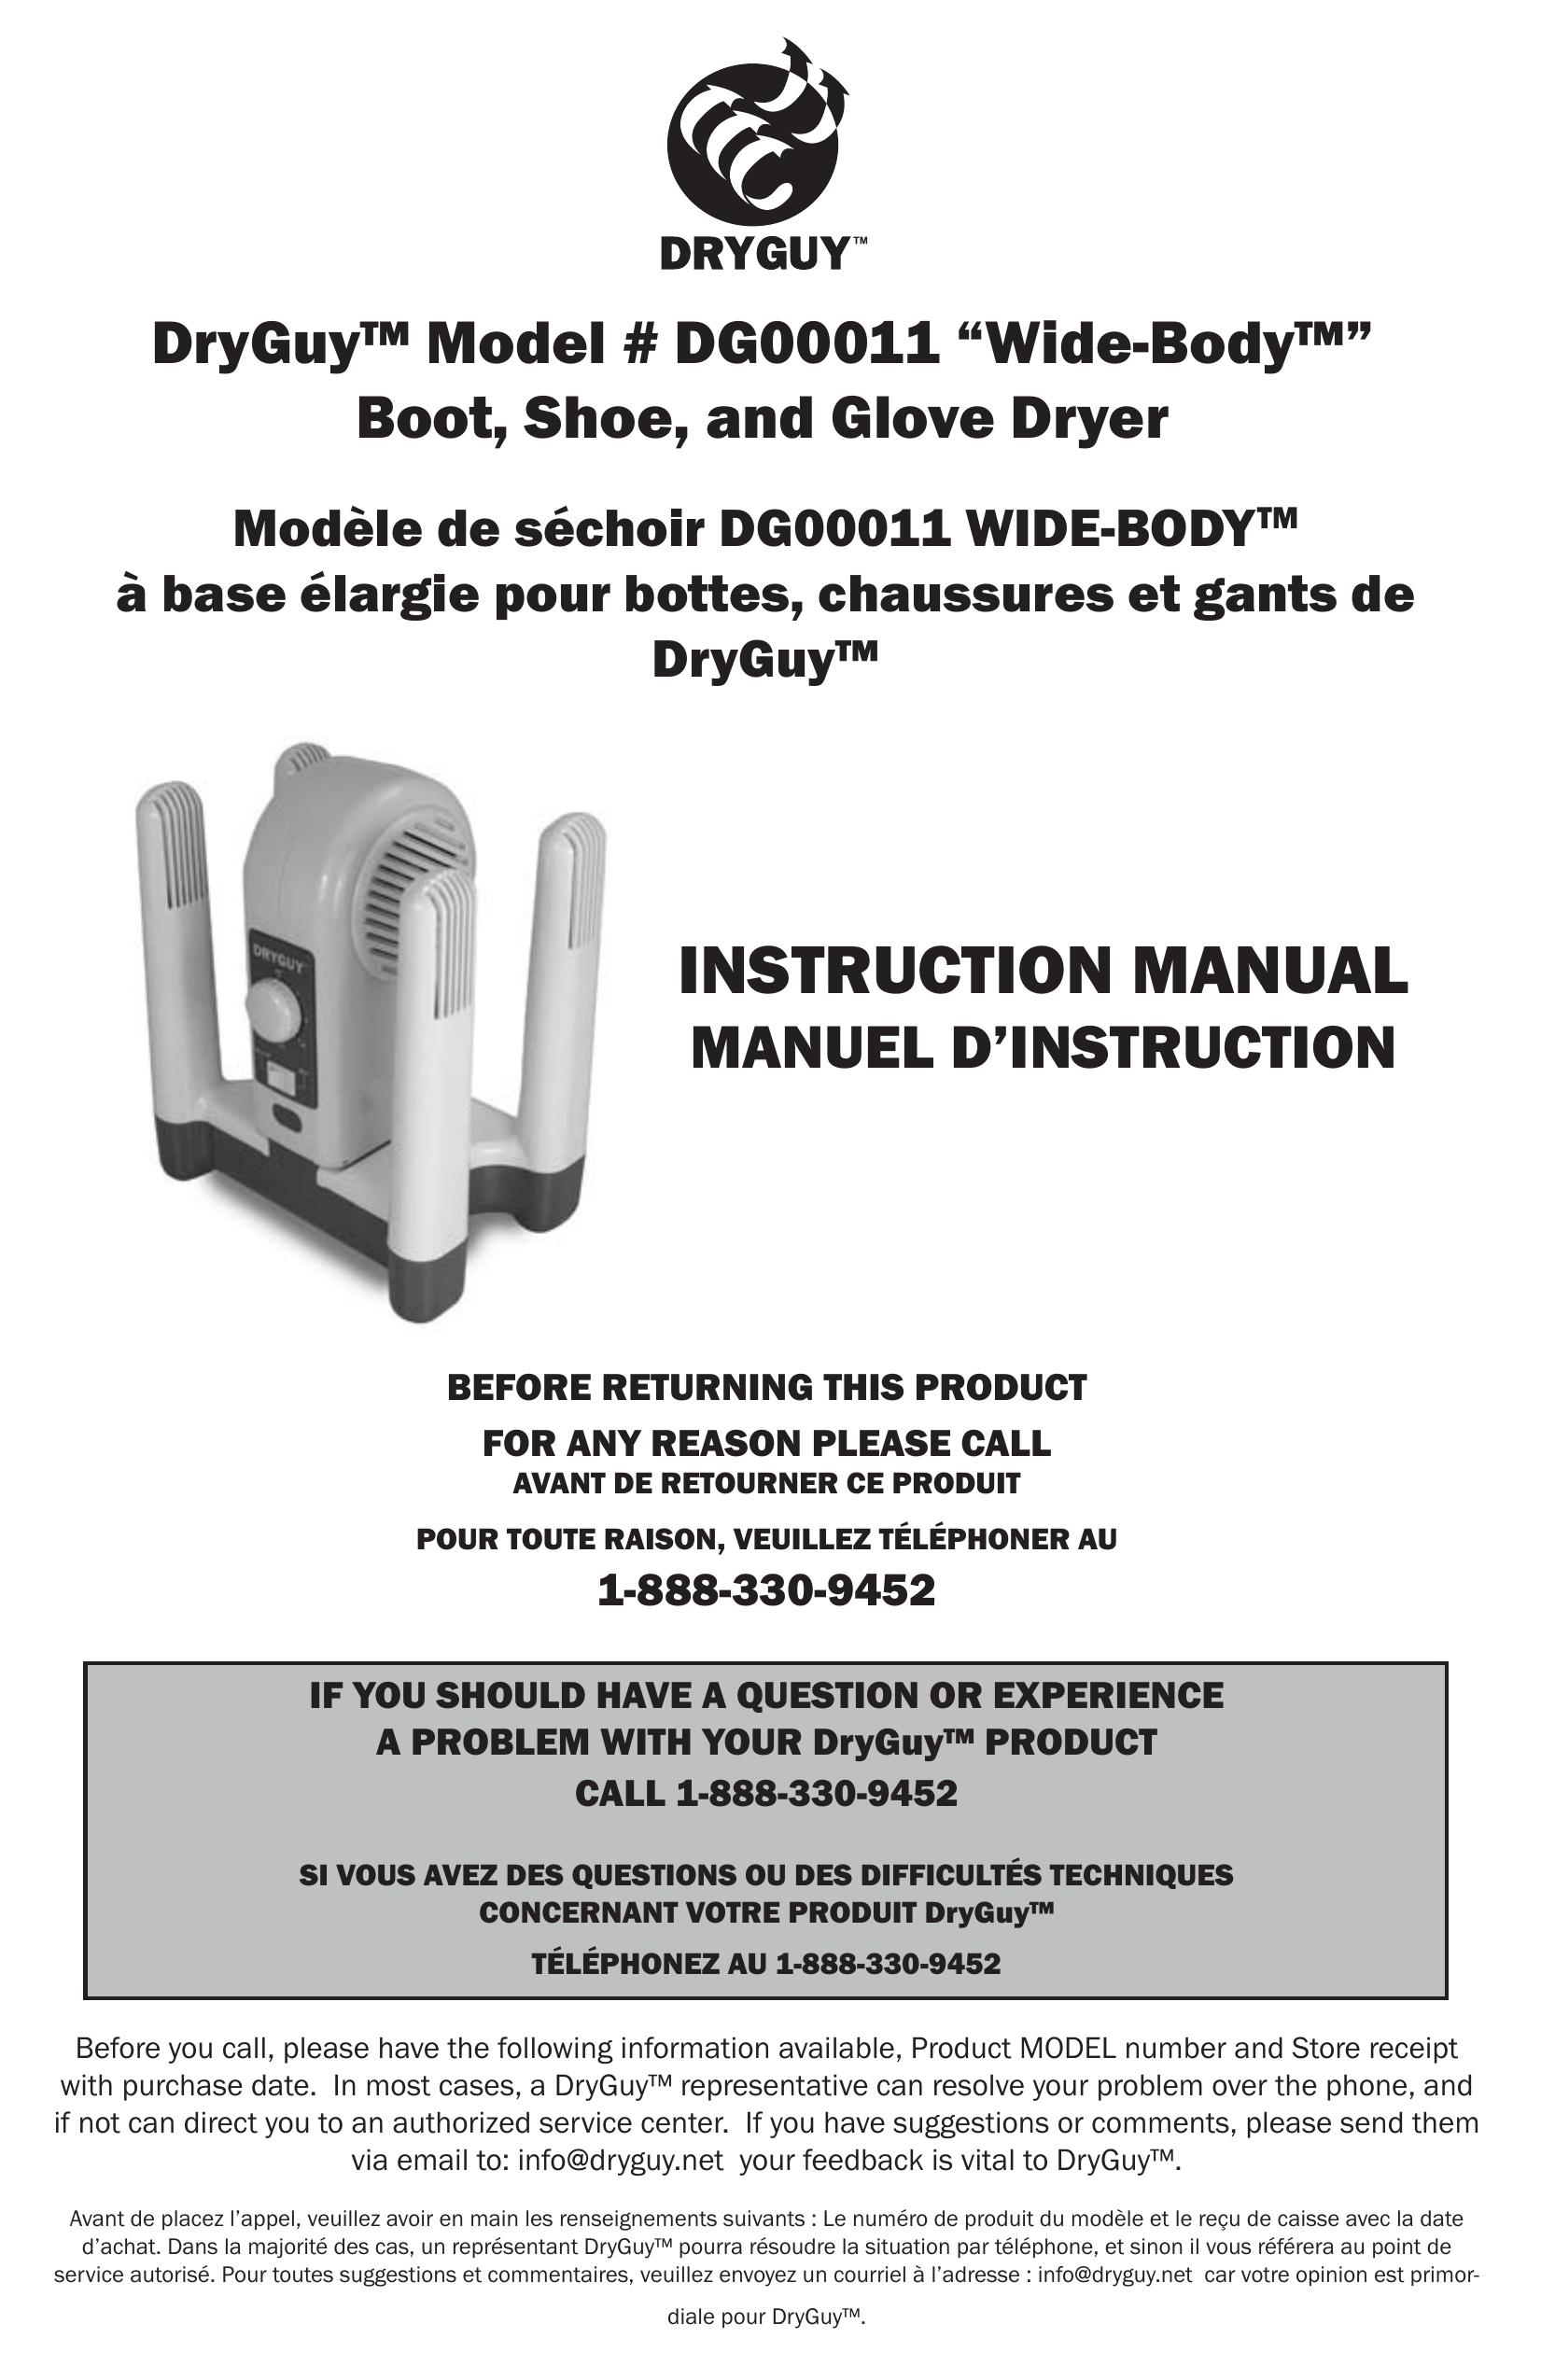 DryGuy DG00011 Clothes Dryer User Manual